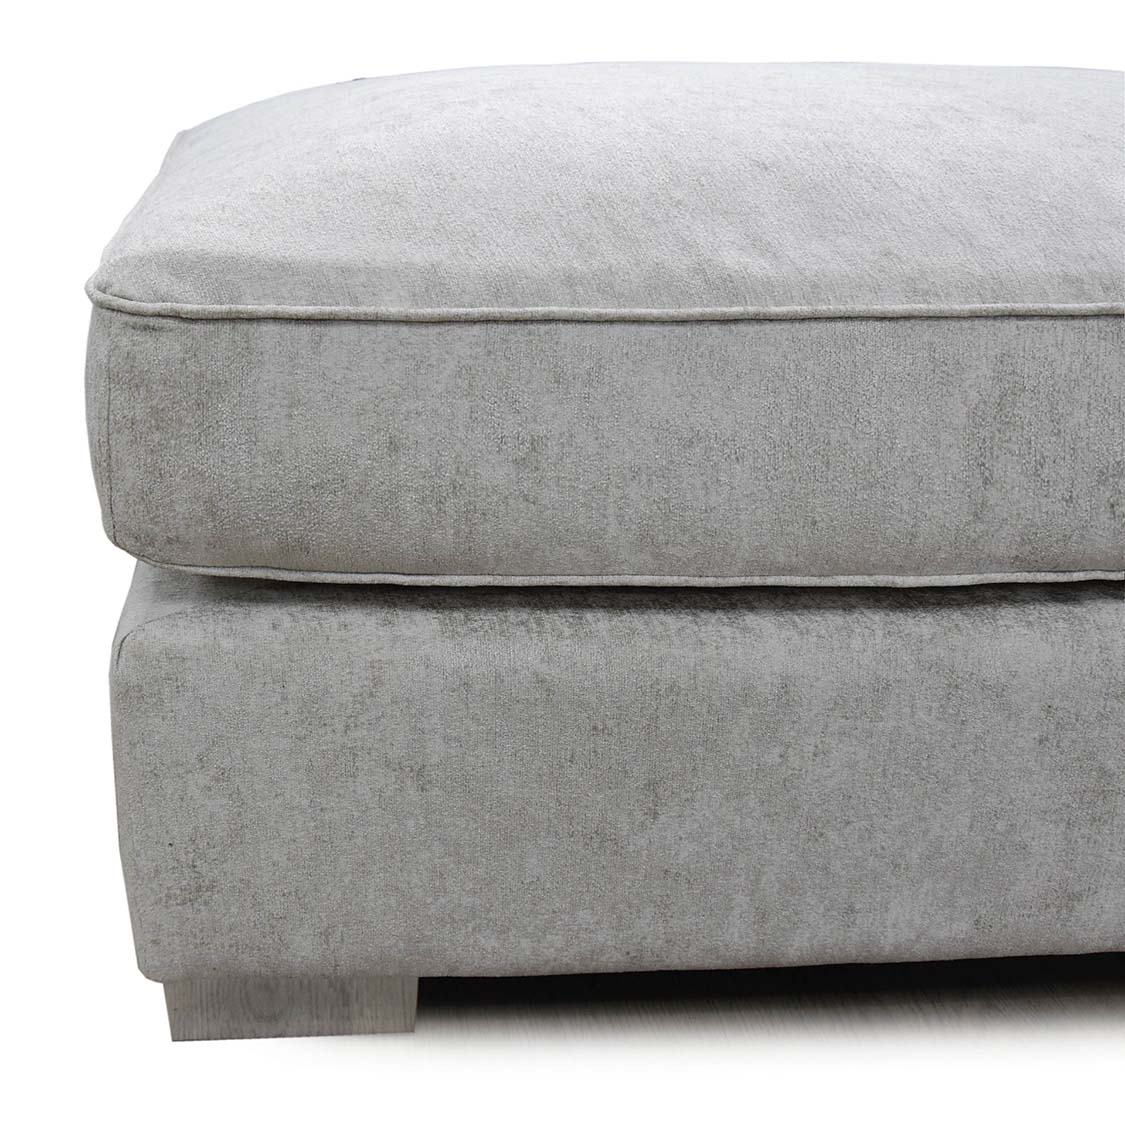 Battersea Footstool in Alaska Silver Chenille - Elegant & Versatile Day Bed Addition